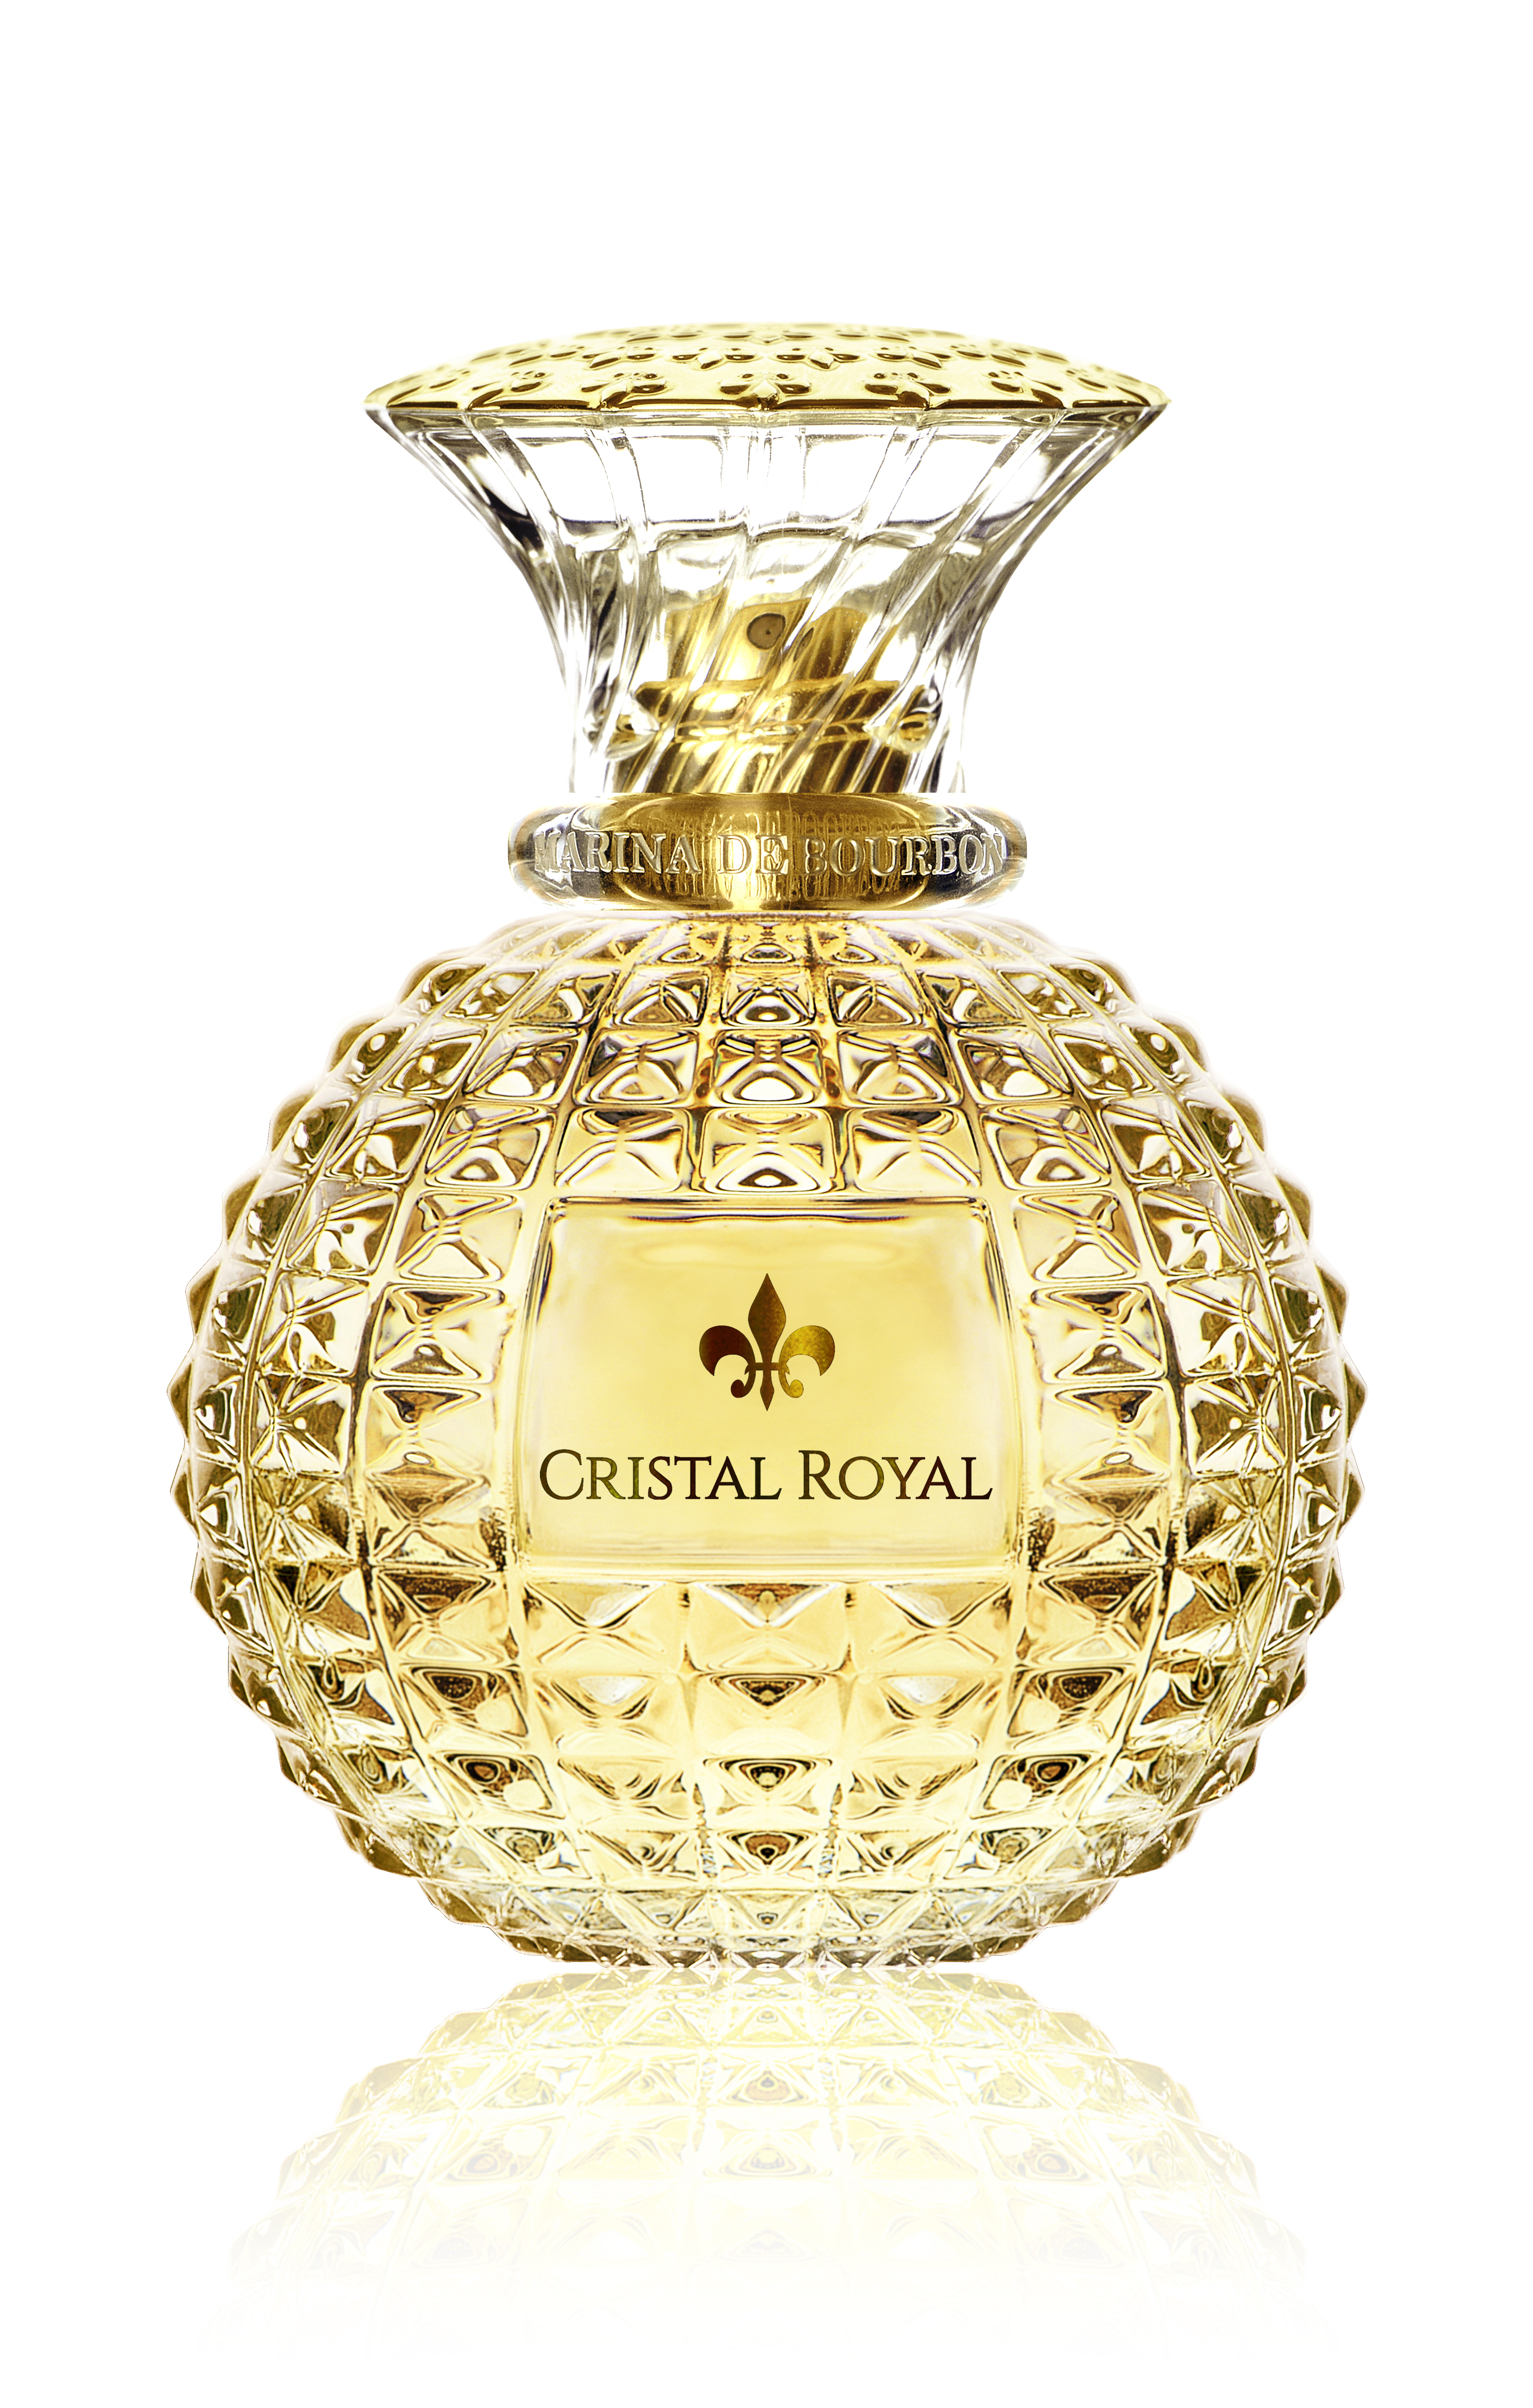 Marina de bourbon cristal royal